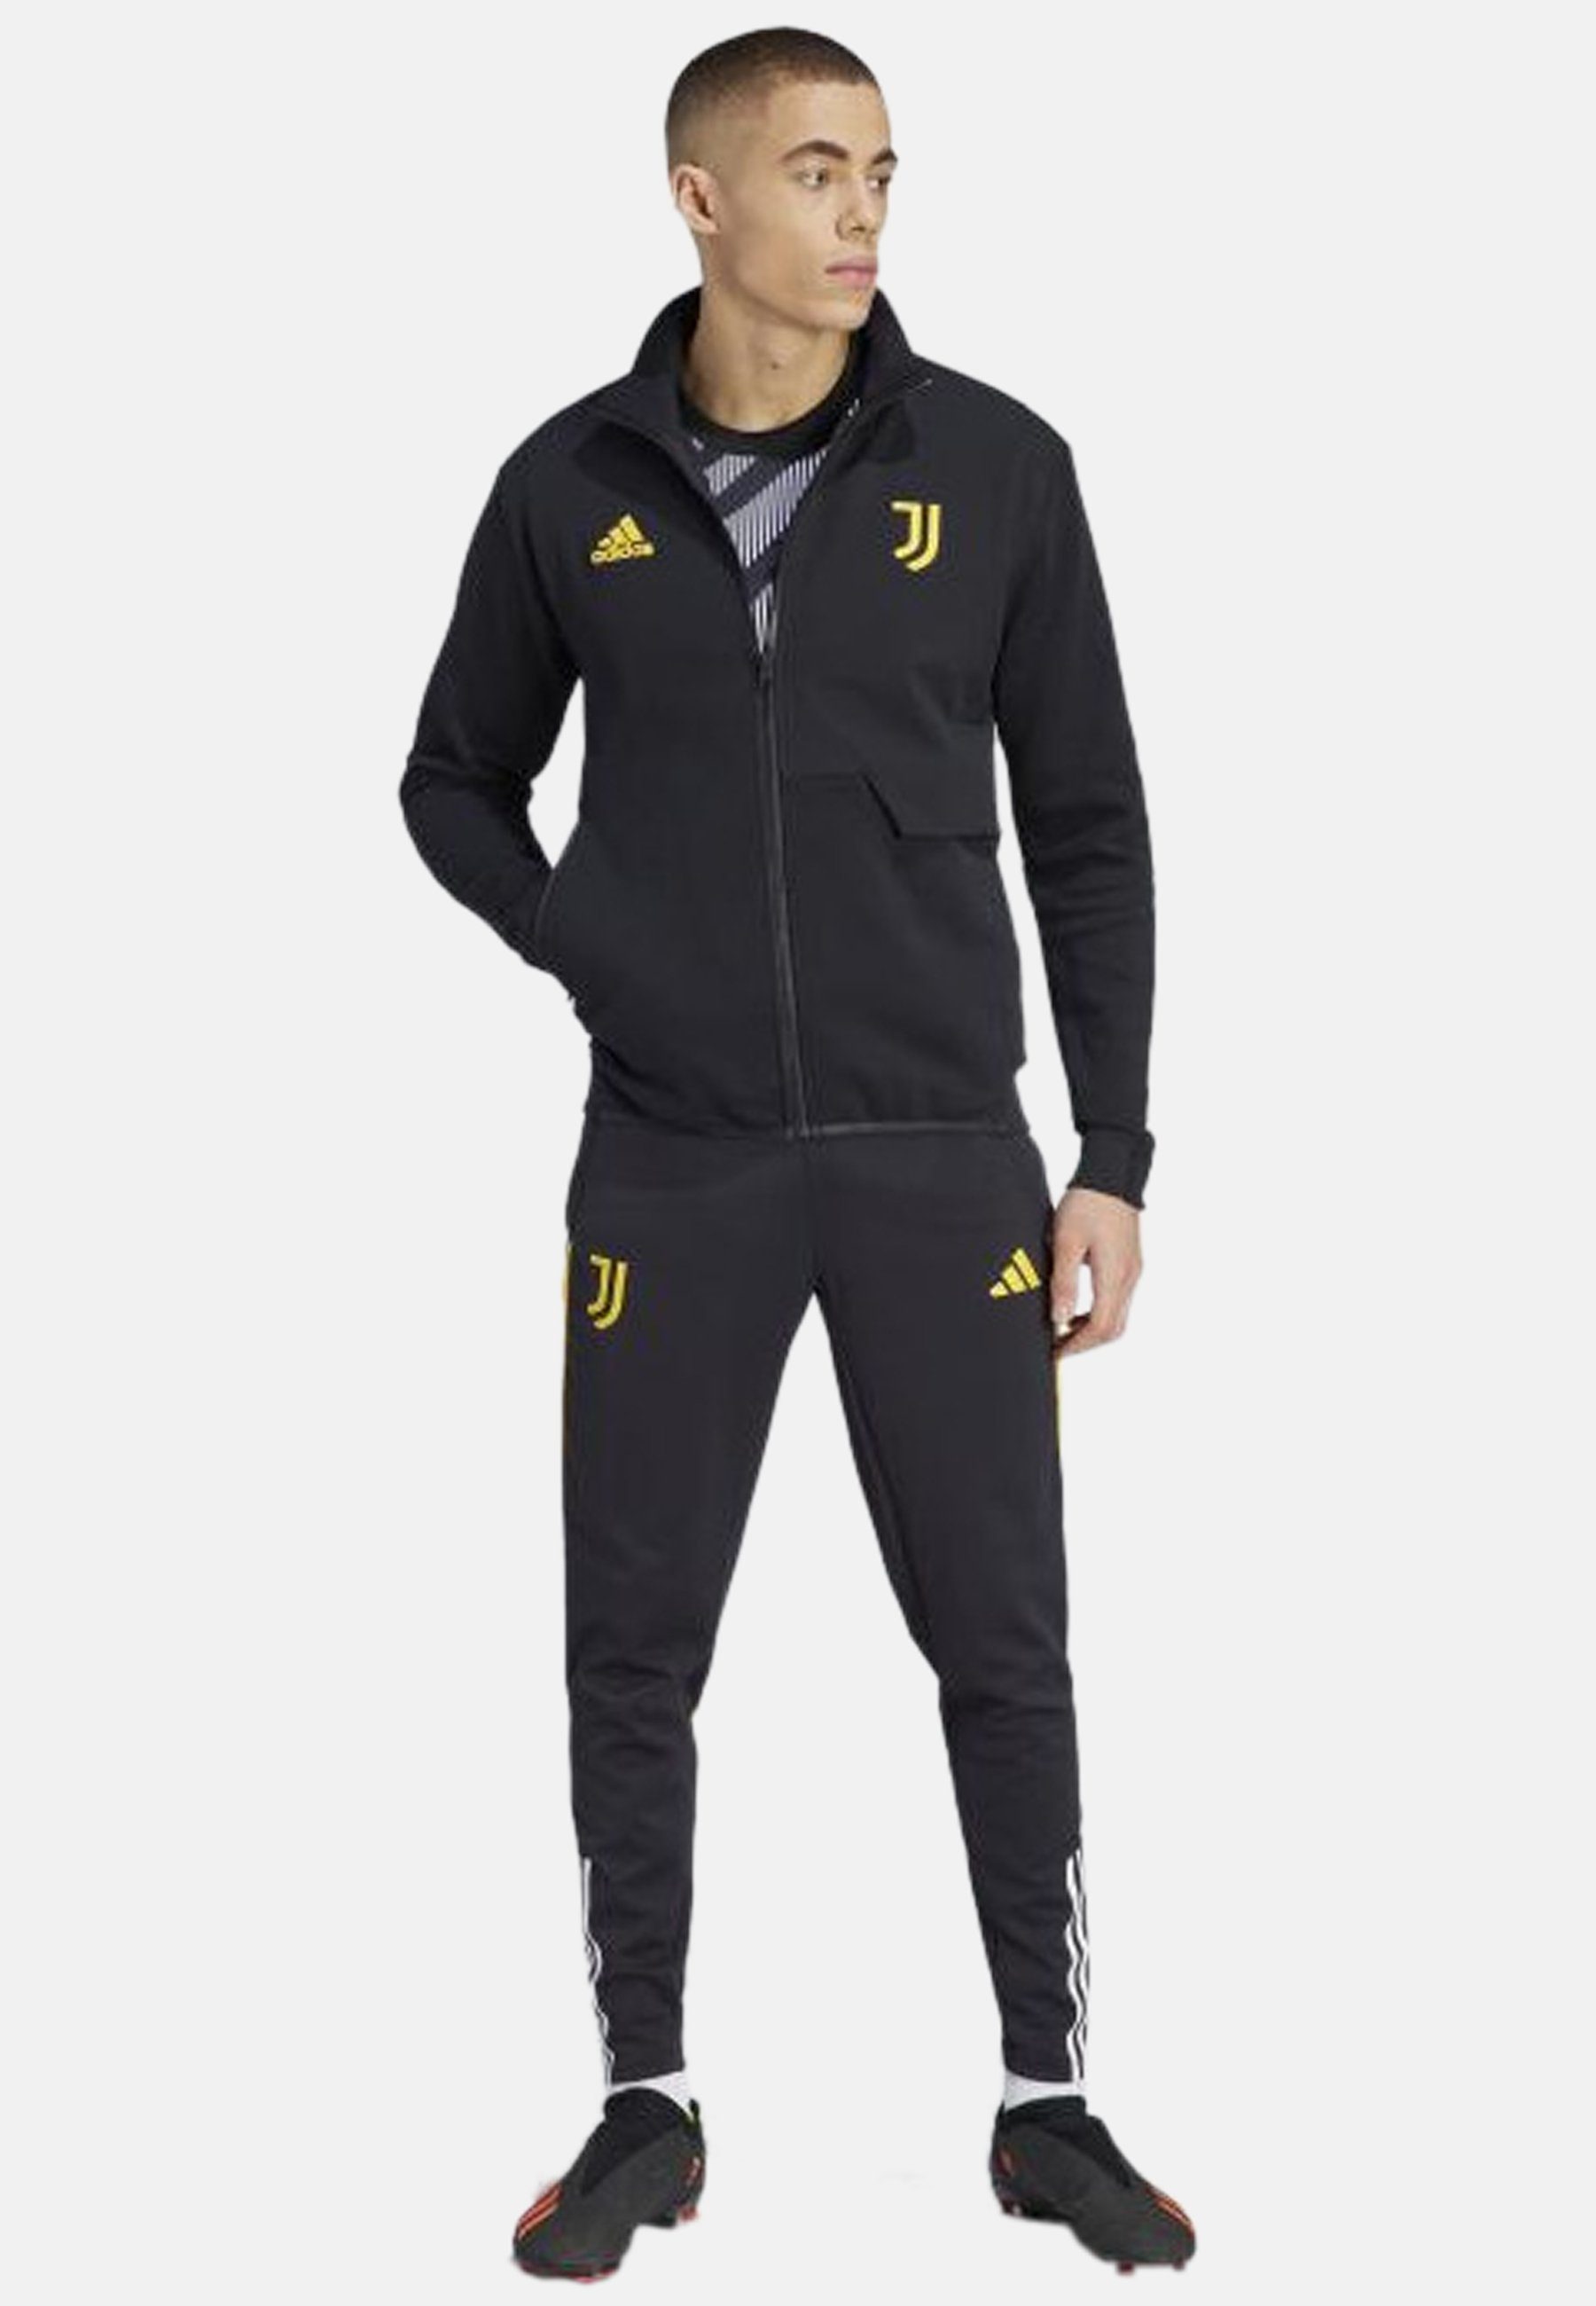 Originals adidas Trainingsjacke Juve schwarz